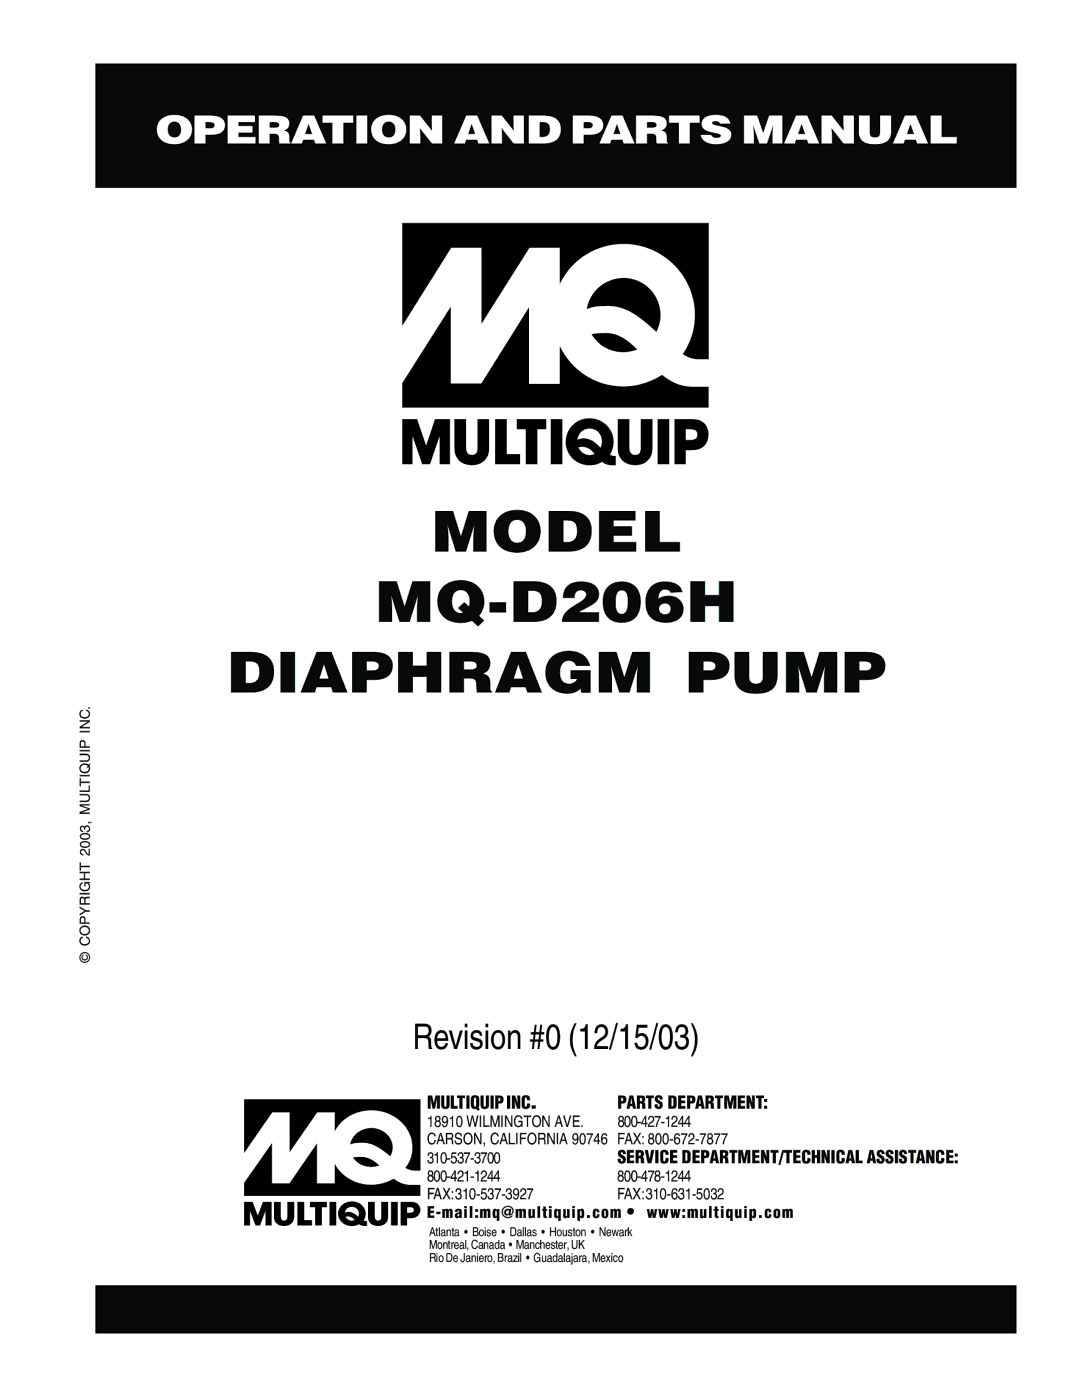 Multiquip MQ- D206H manual Model 